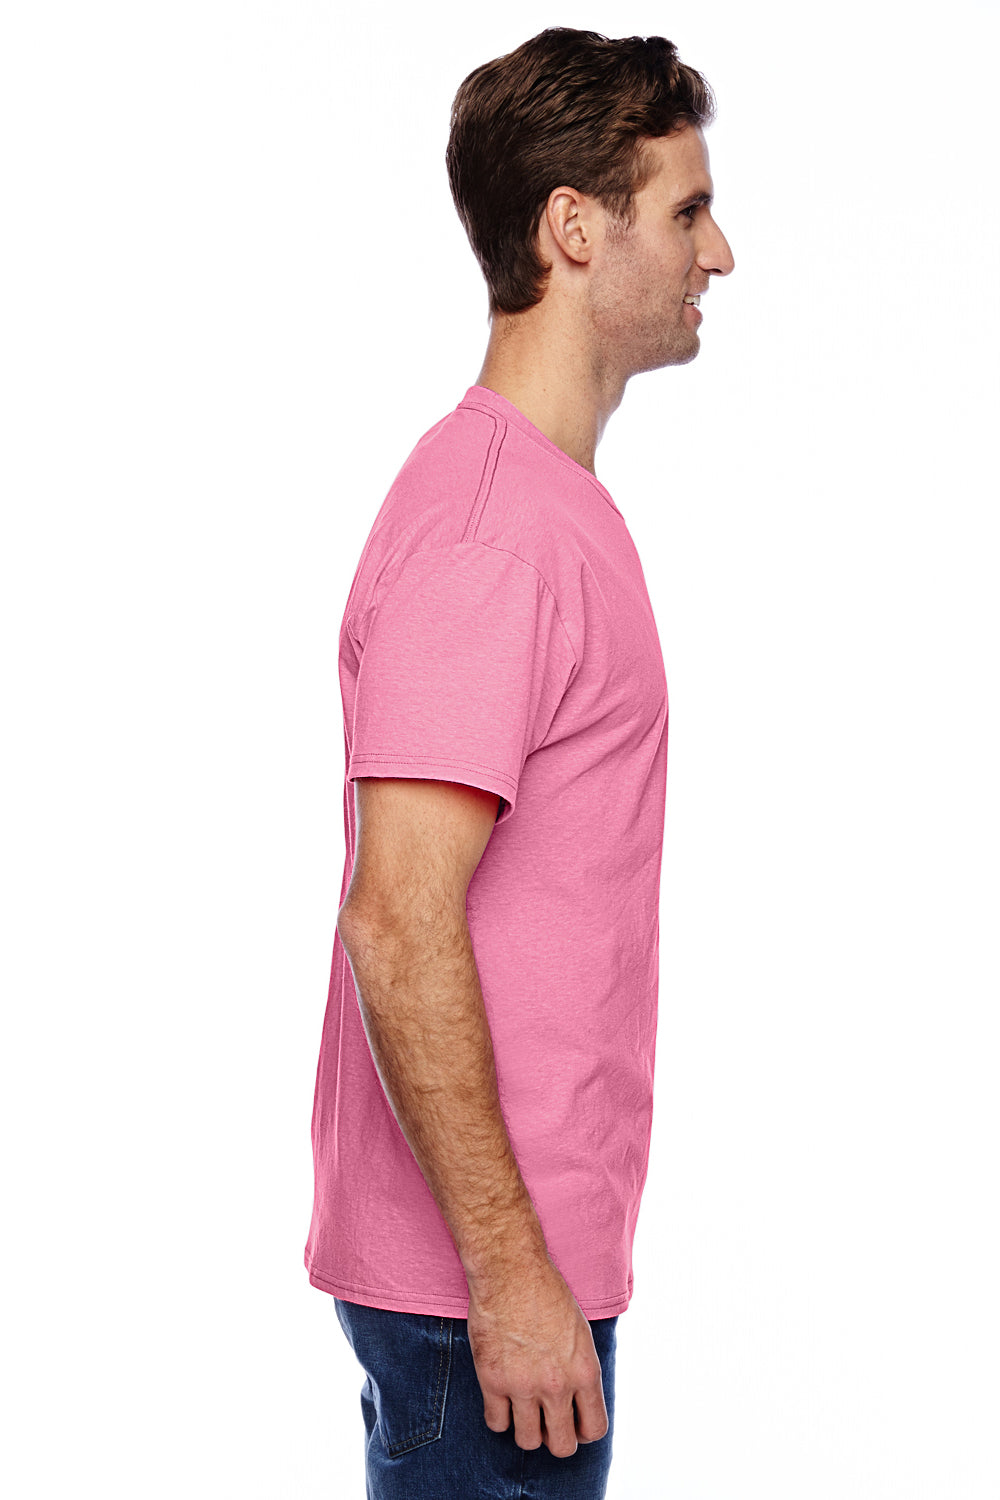 Hanes P4200 Mens X-Temp Moisture Wicking Short Sleeve Crewneck T-Shirt Heather Neon Pink Side